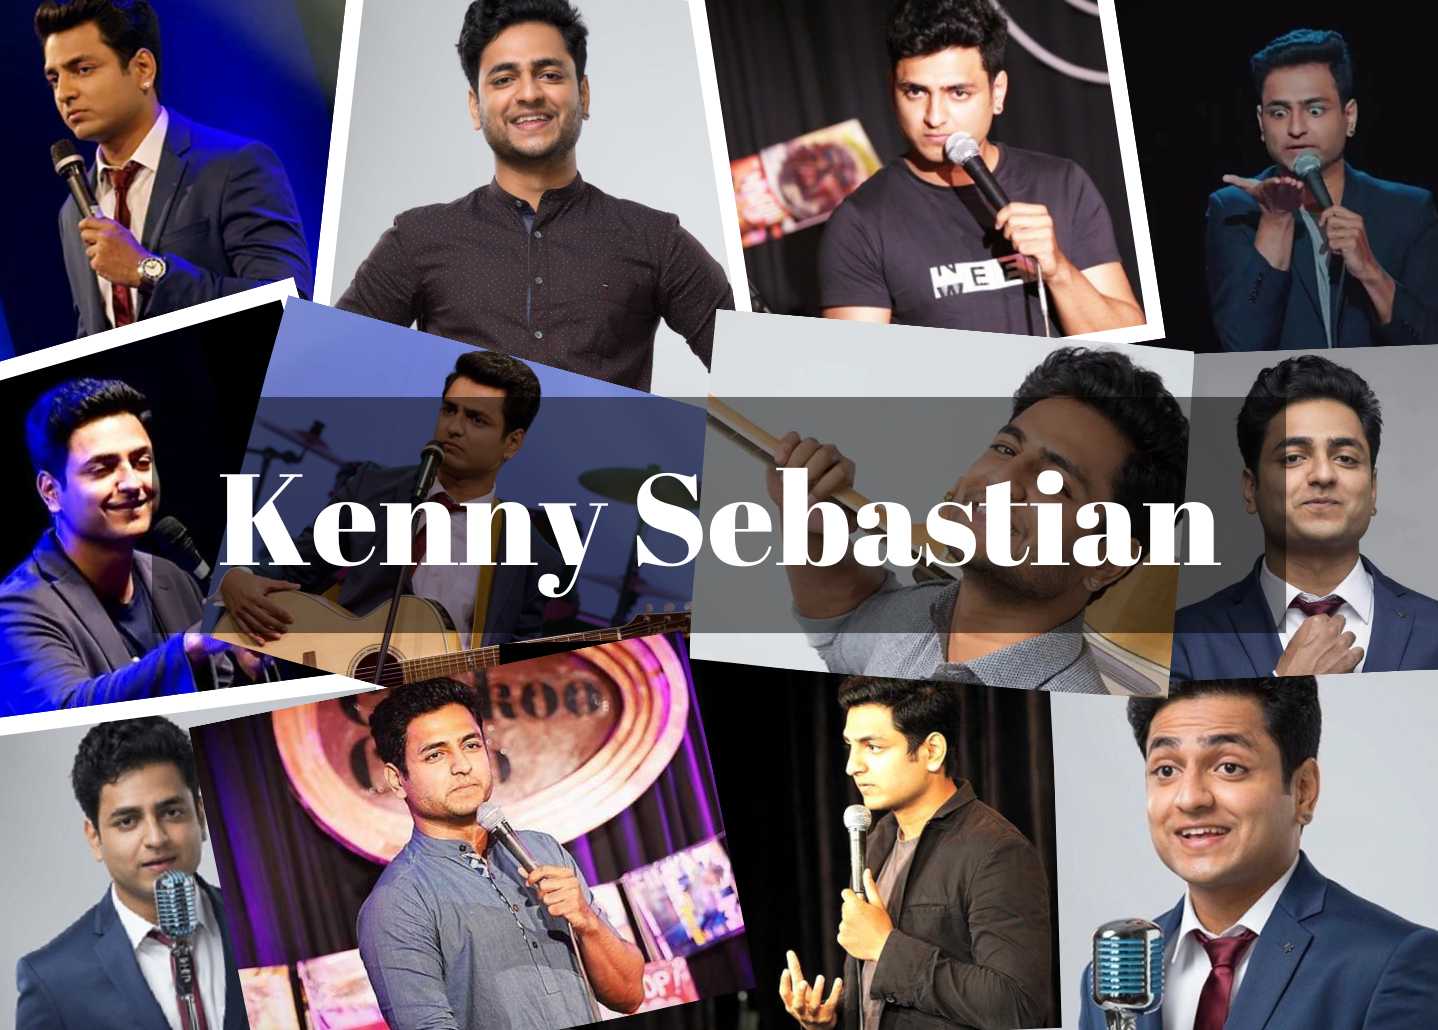 Kenny Sebastian